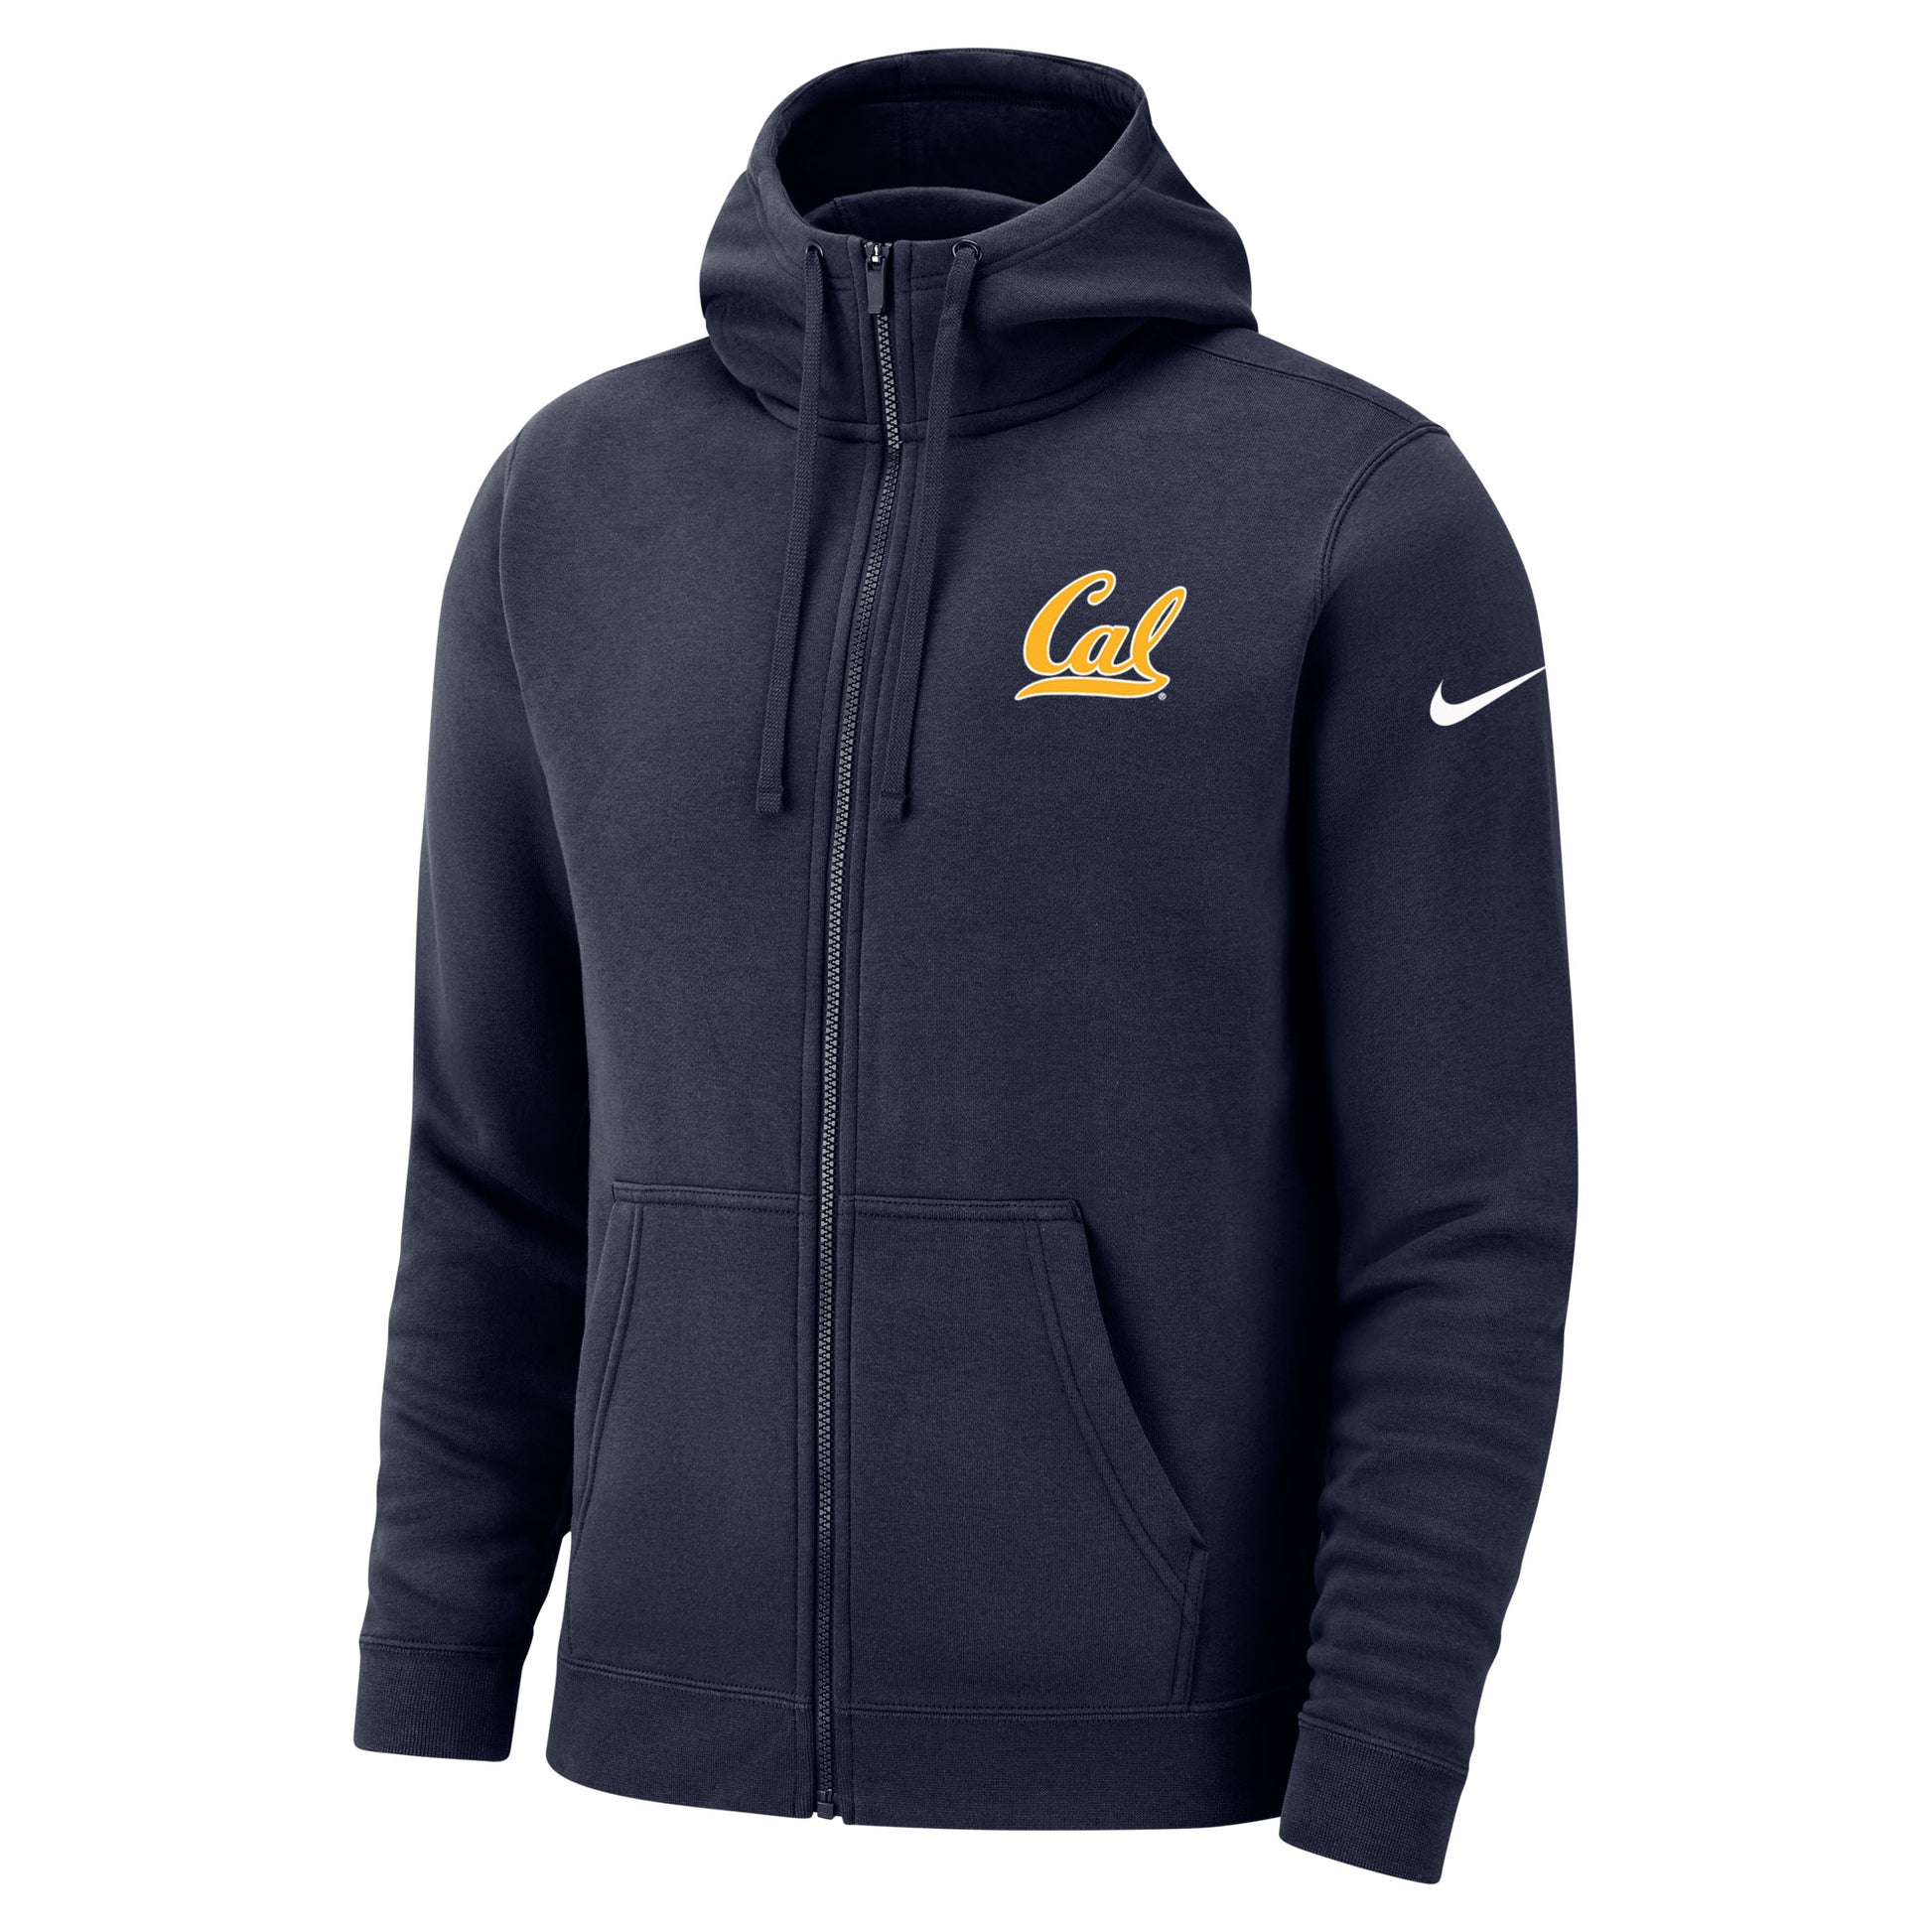 U.C. Berkeley Nike script Cal club fleece hoodie sweatshirt-Navy-Shop College Wear